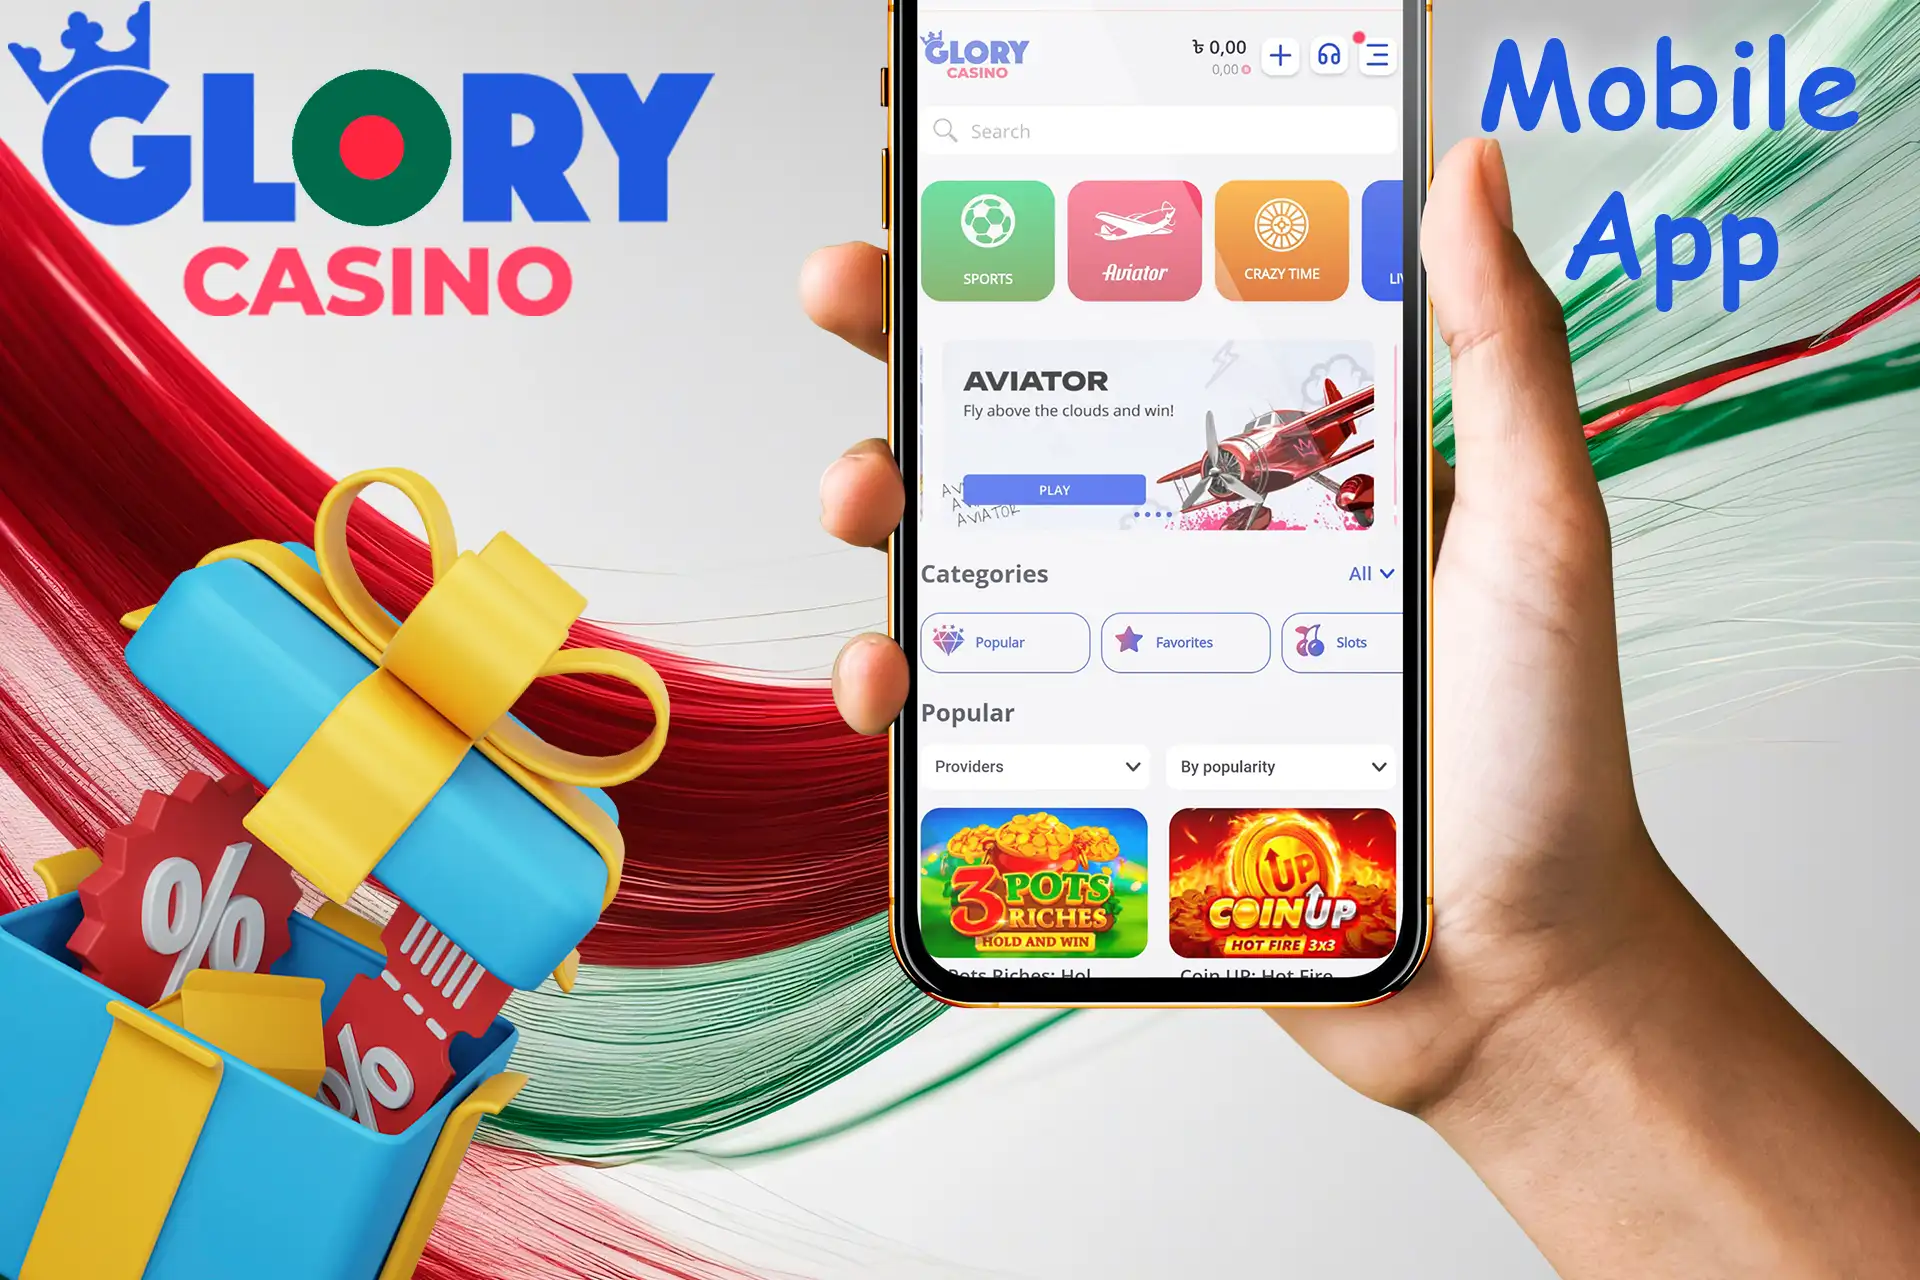 Feel mobile with the Glory Casino Bangladesh mobile application and get your bonus!